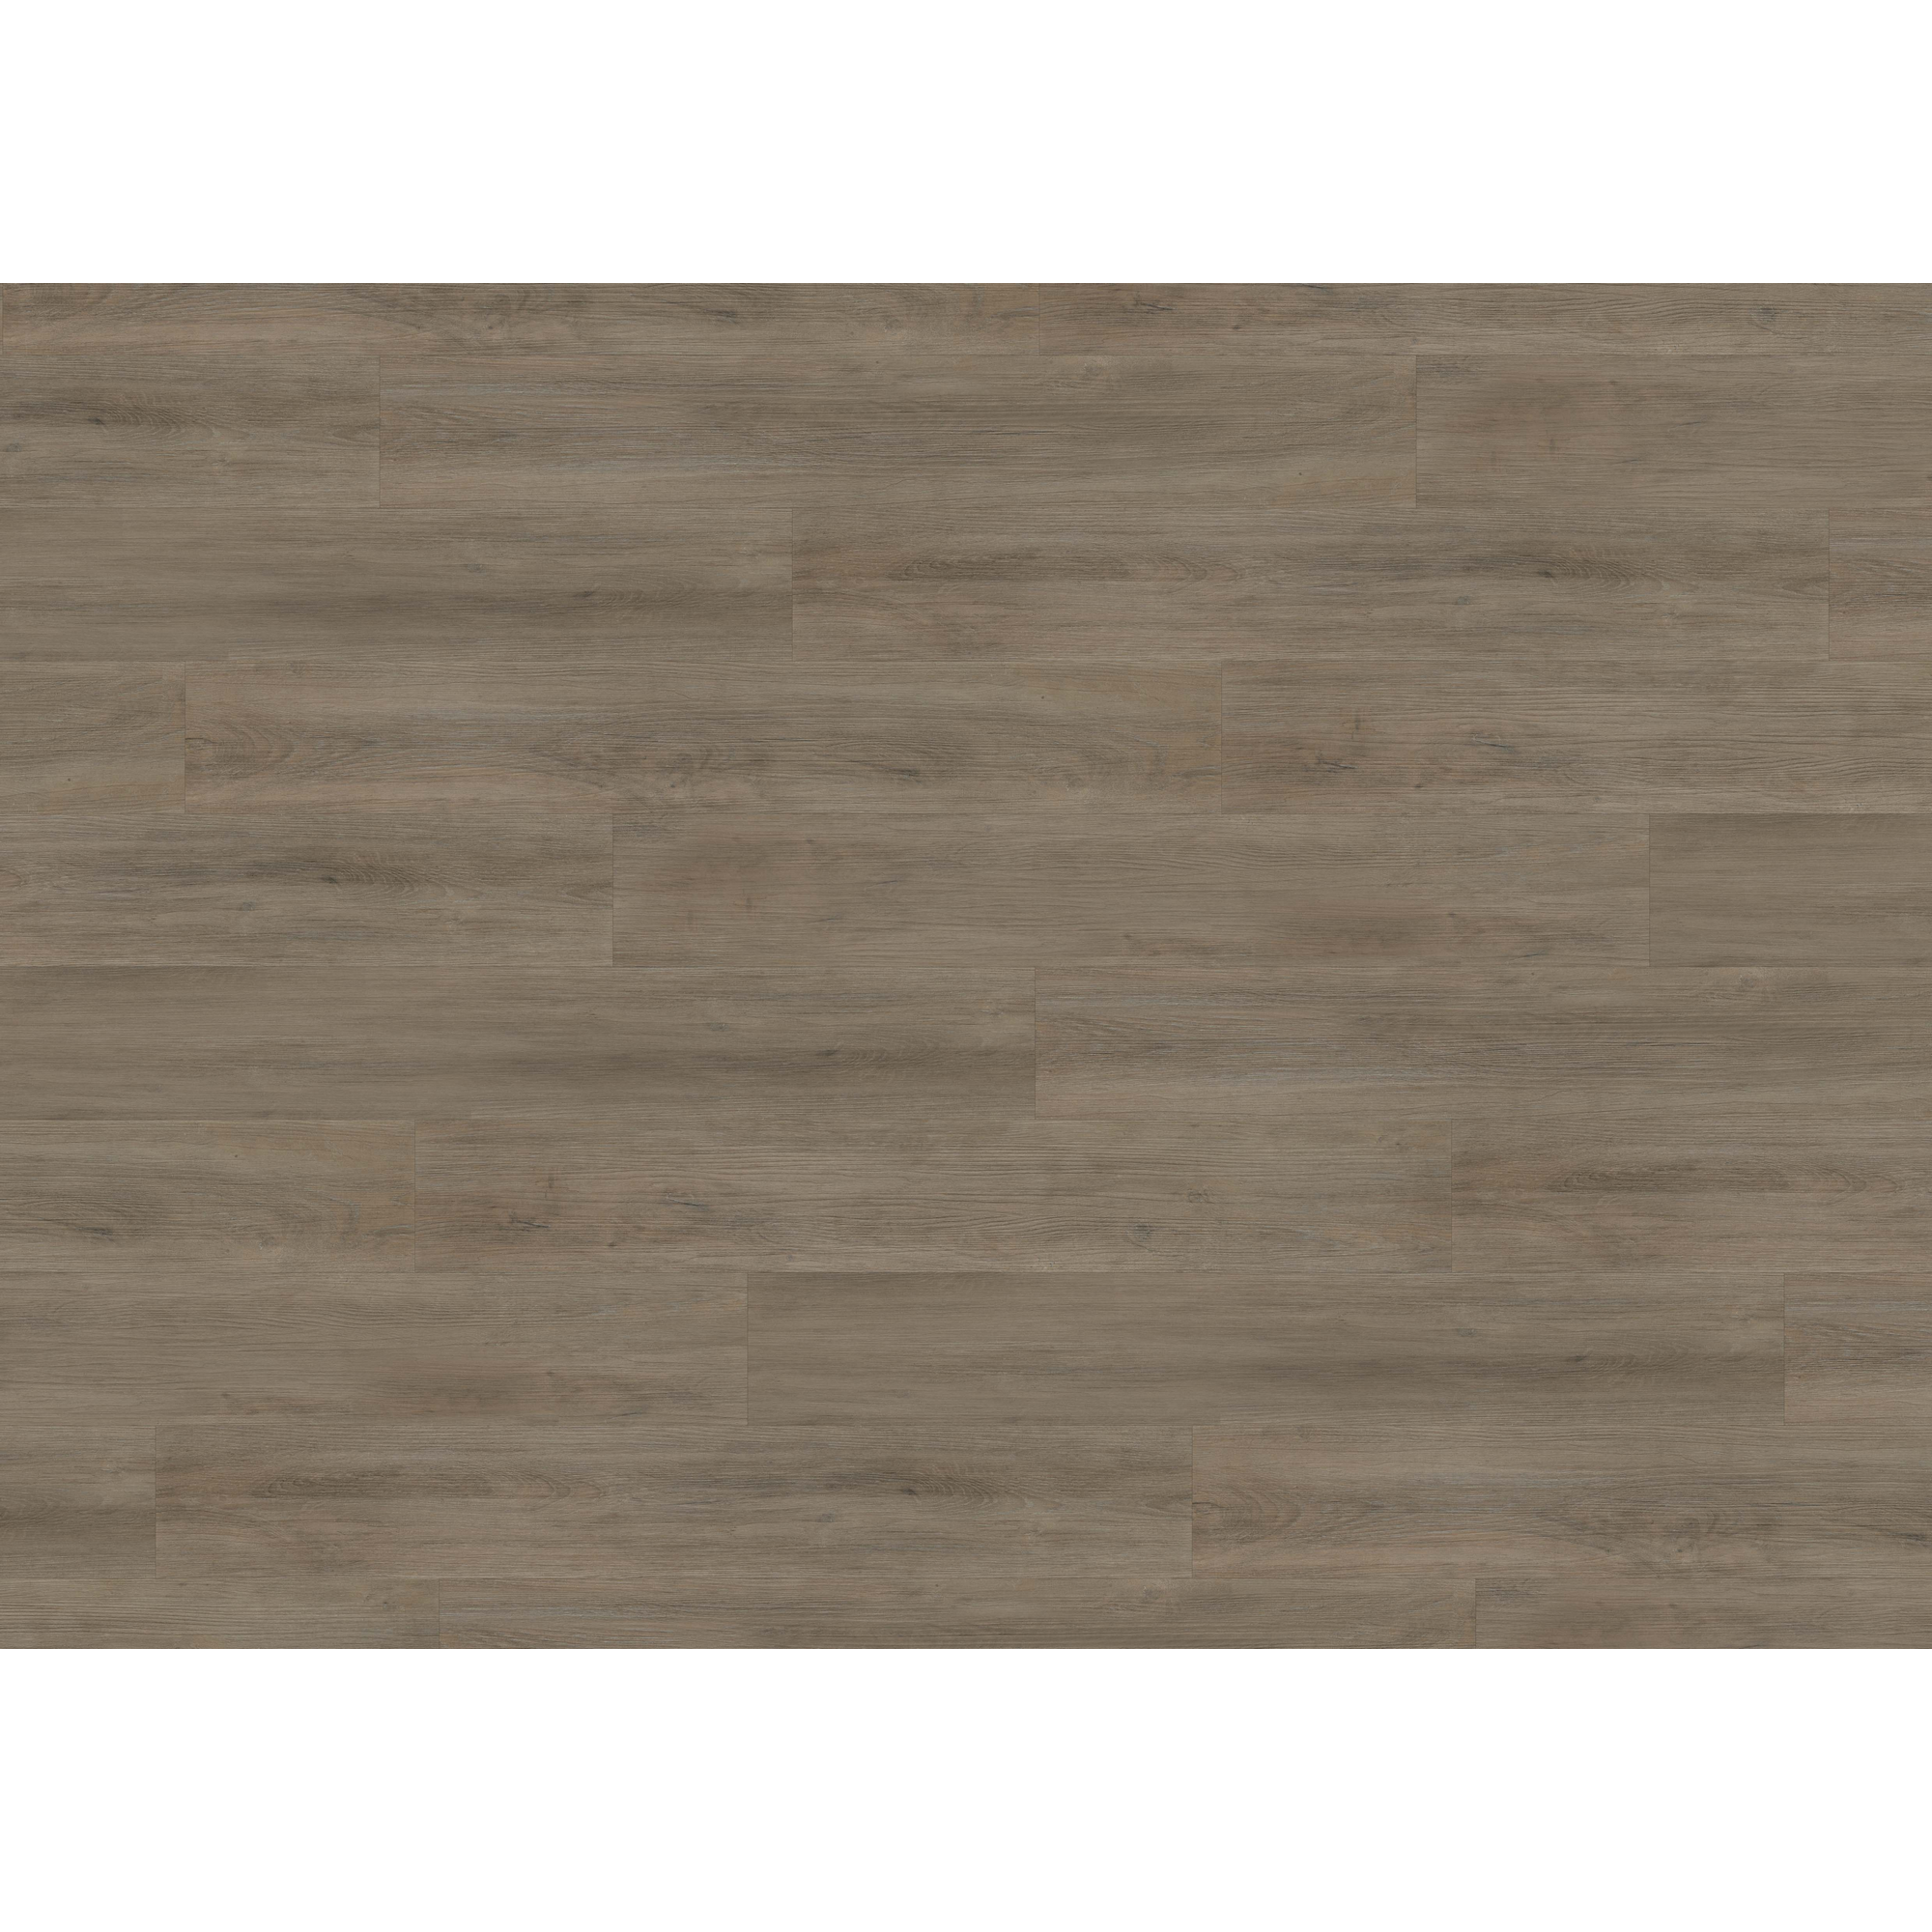 Vinylboden 'Rigid' Corton Oak braun 4 mm + product picture